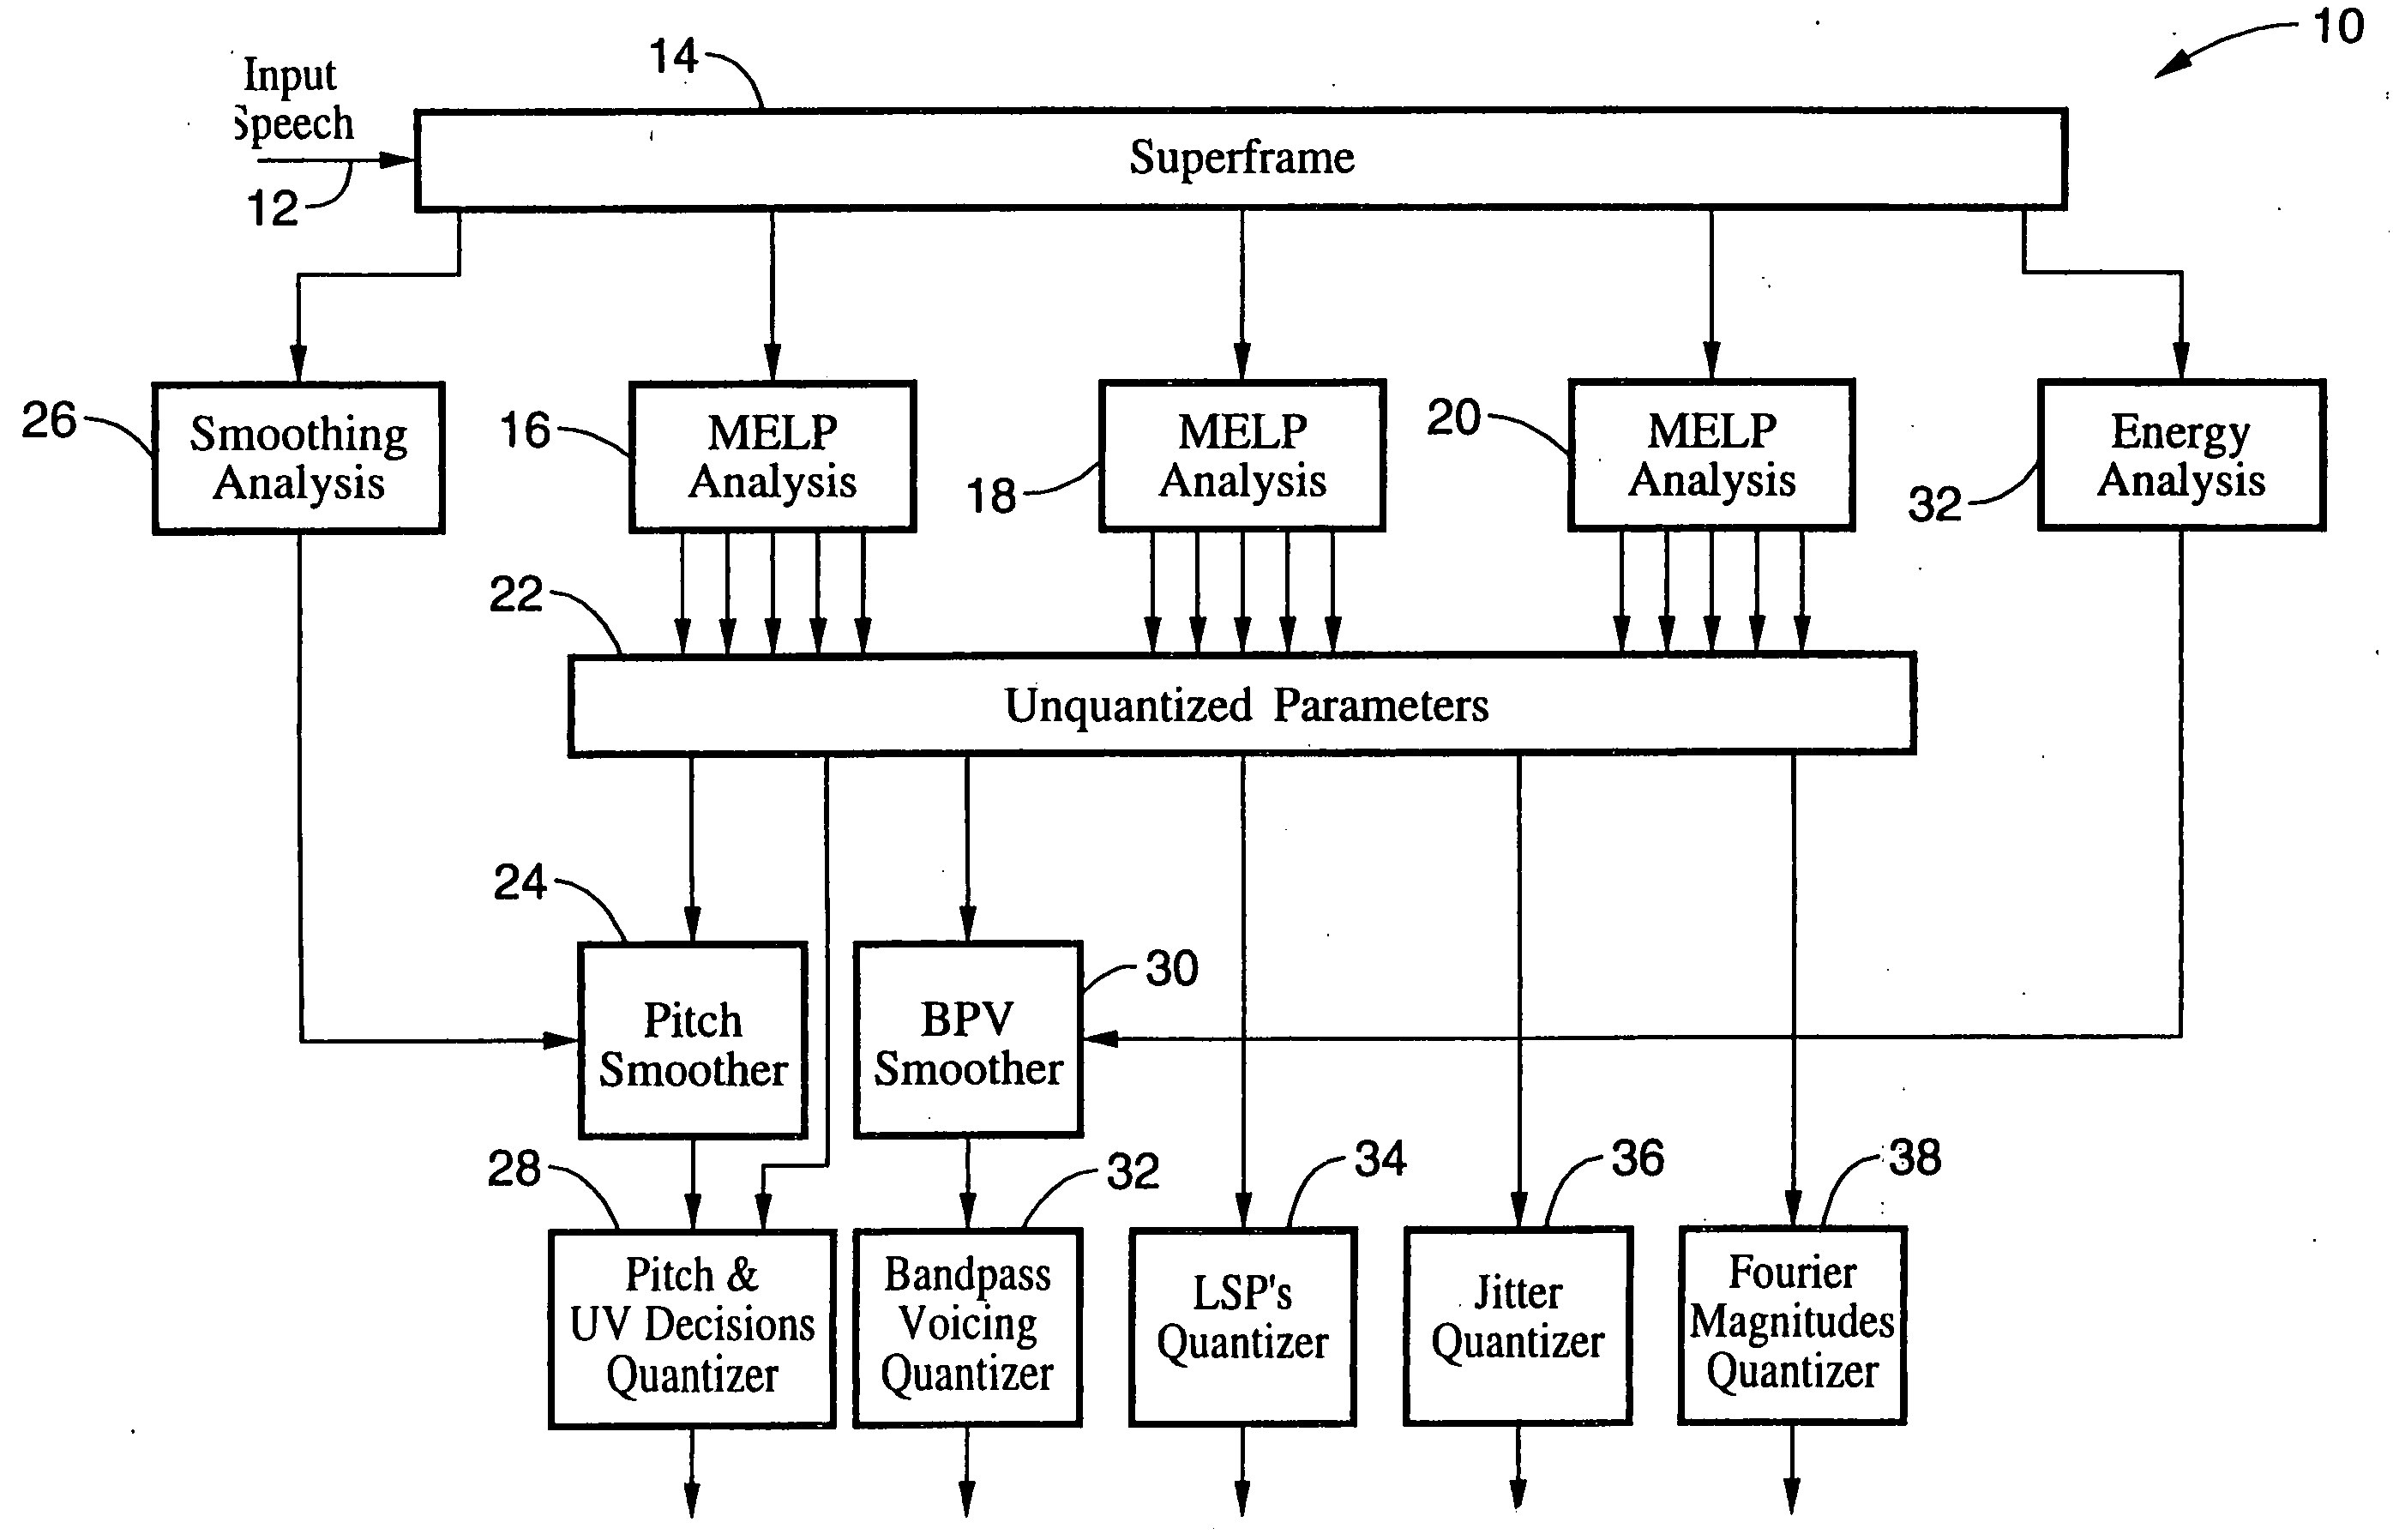 LPC-harmonic vocoder with superframe structure